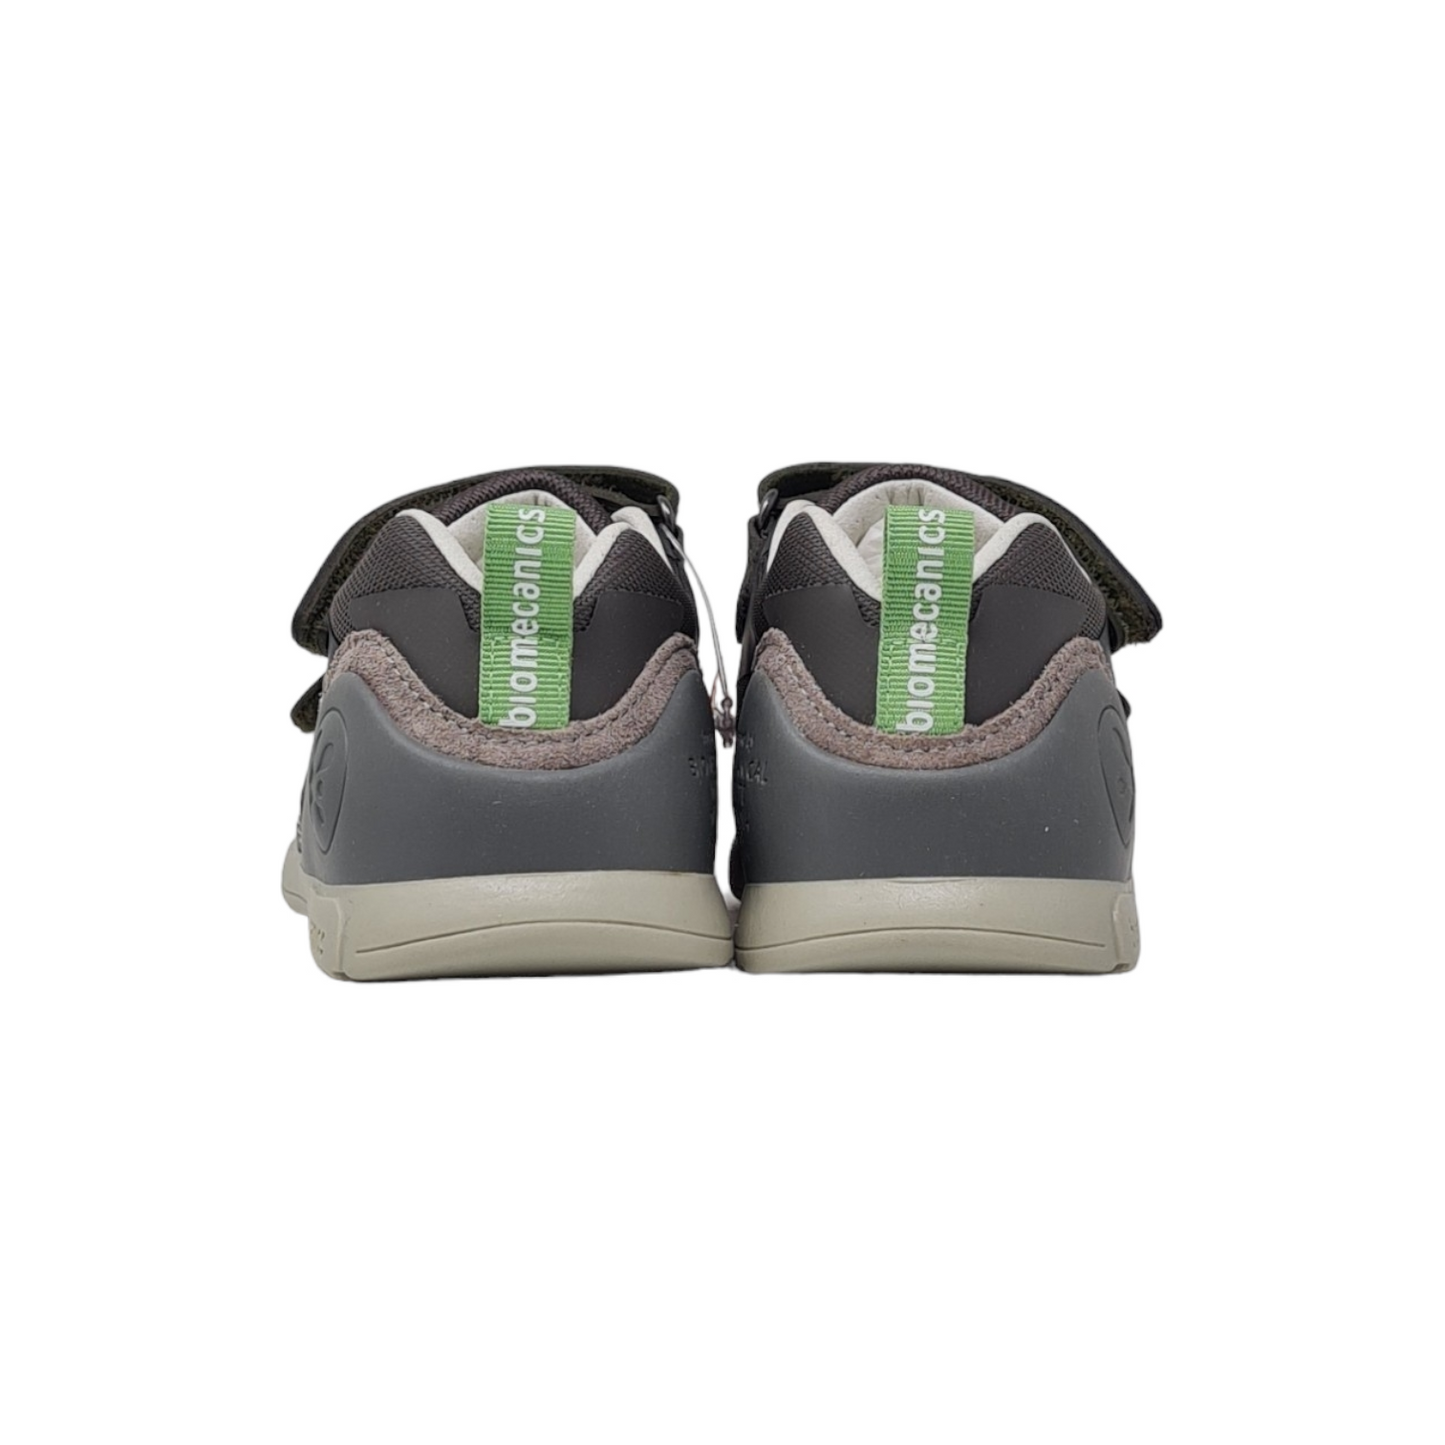 Torn sneakers 231143-B